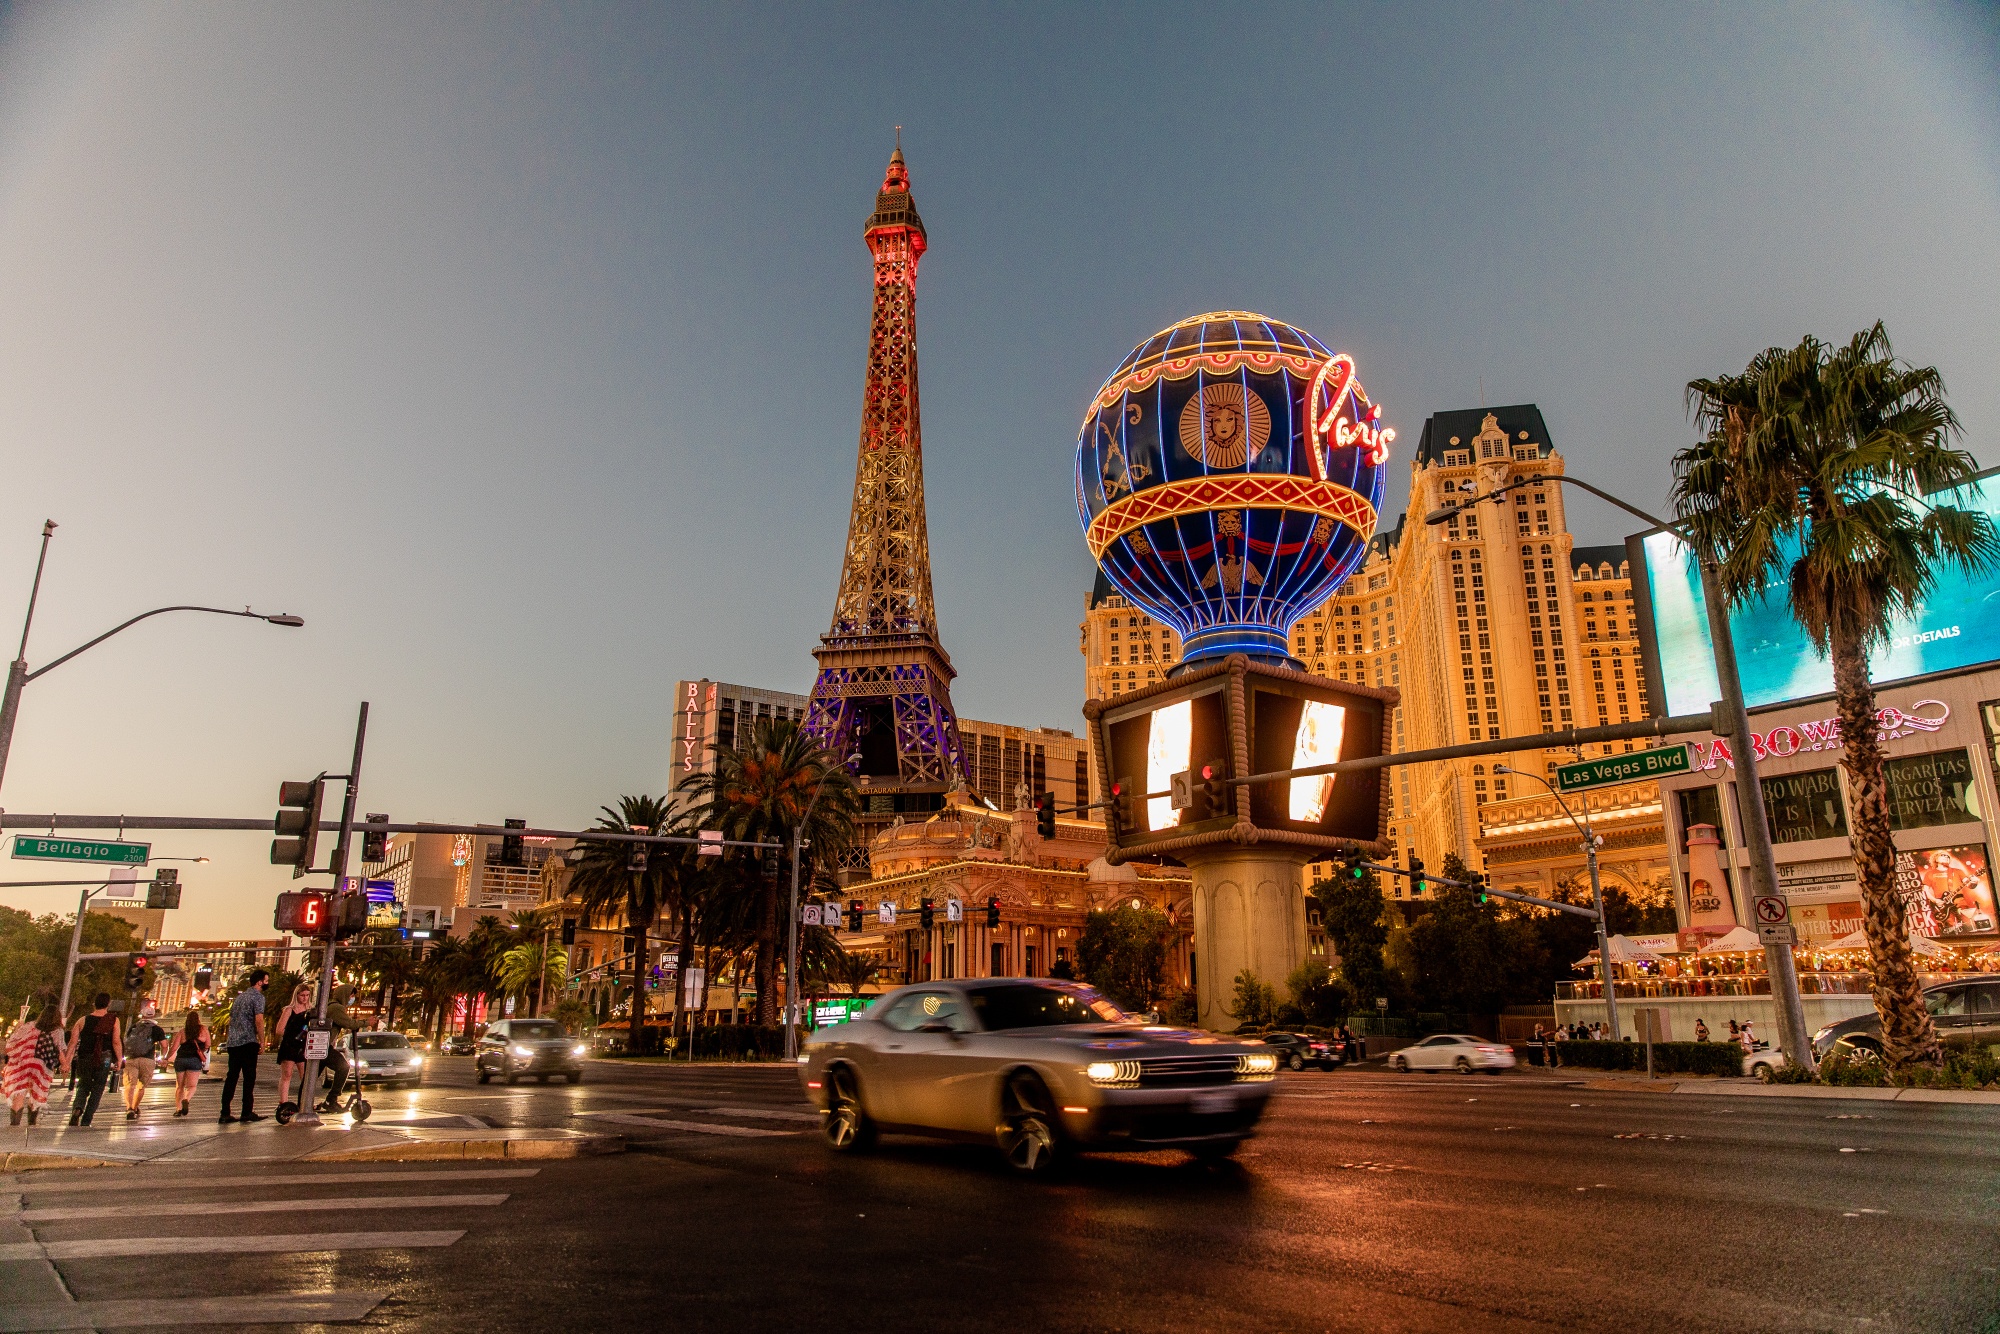 Las Vegas casinos seek to power their bright lights with renewable energy, Solar power